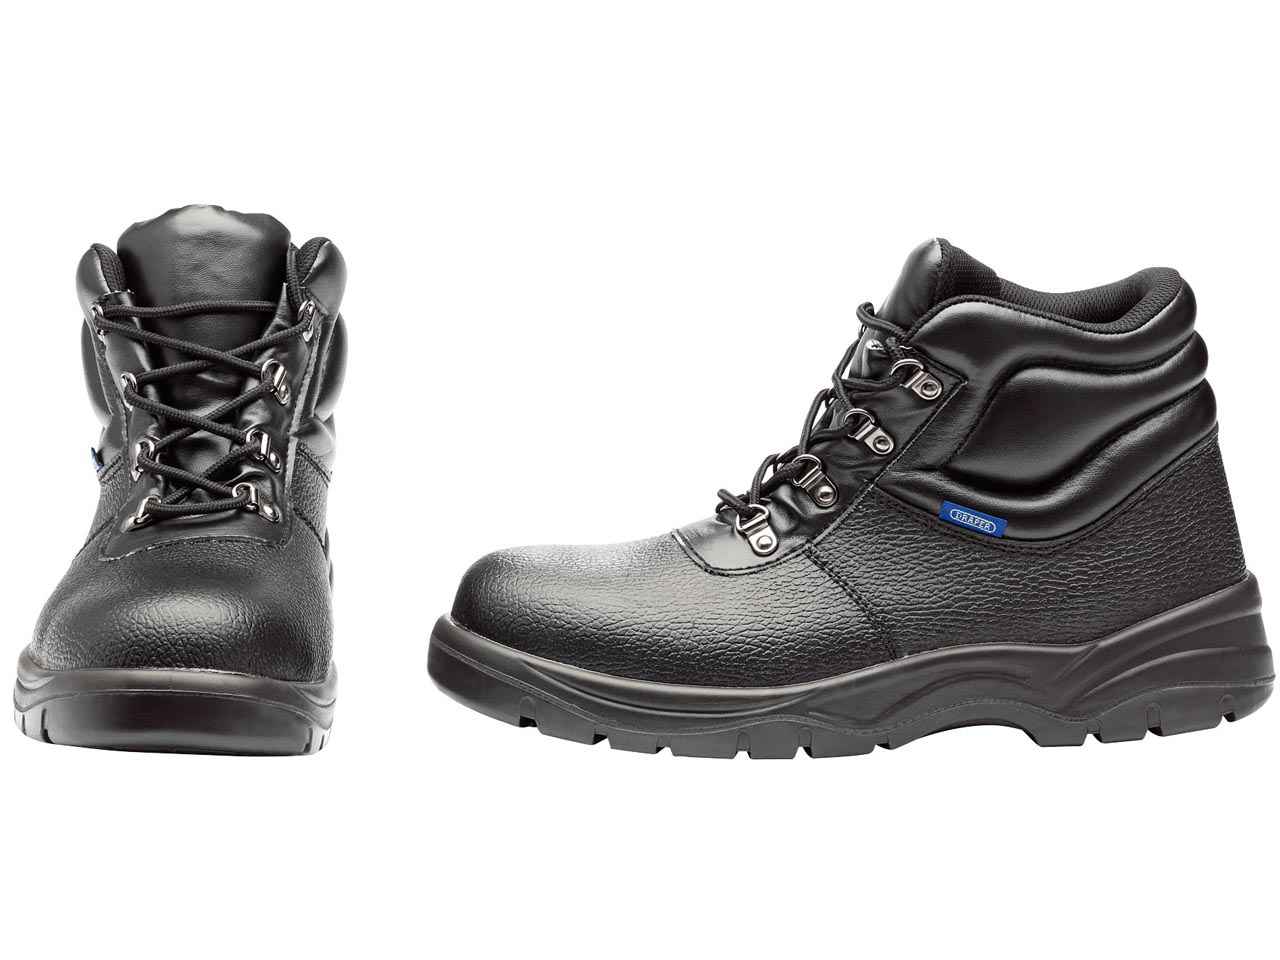 Draper CHSB Chukka Style Safety Boots Size 9